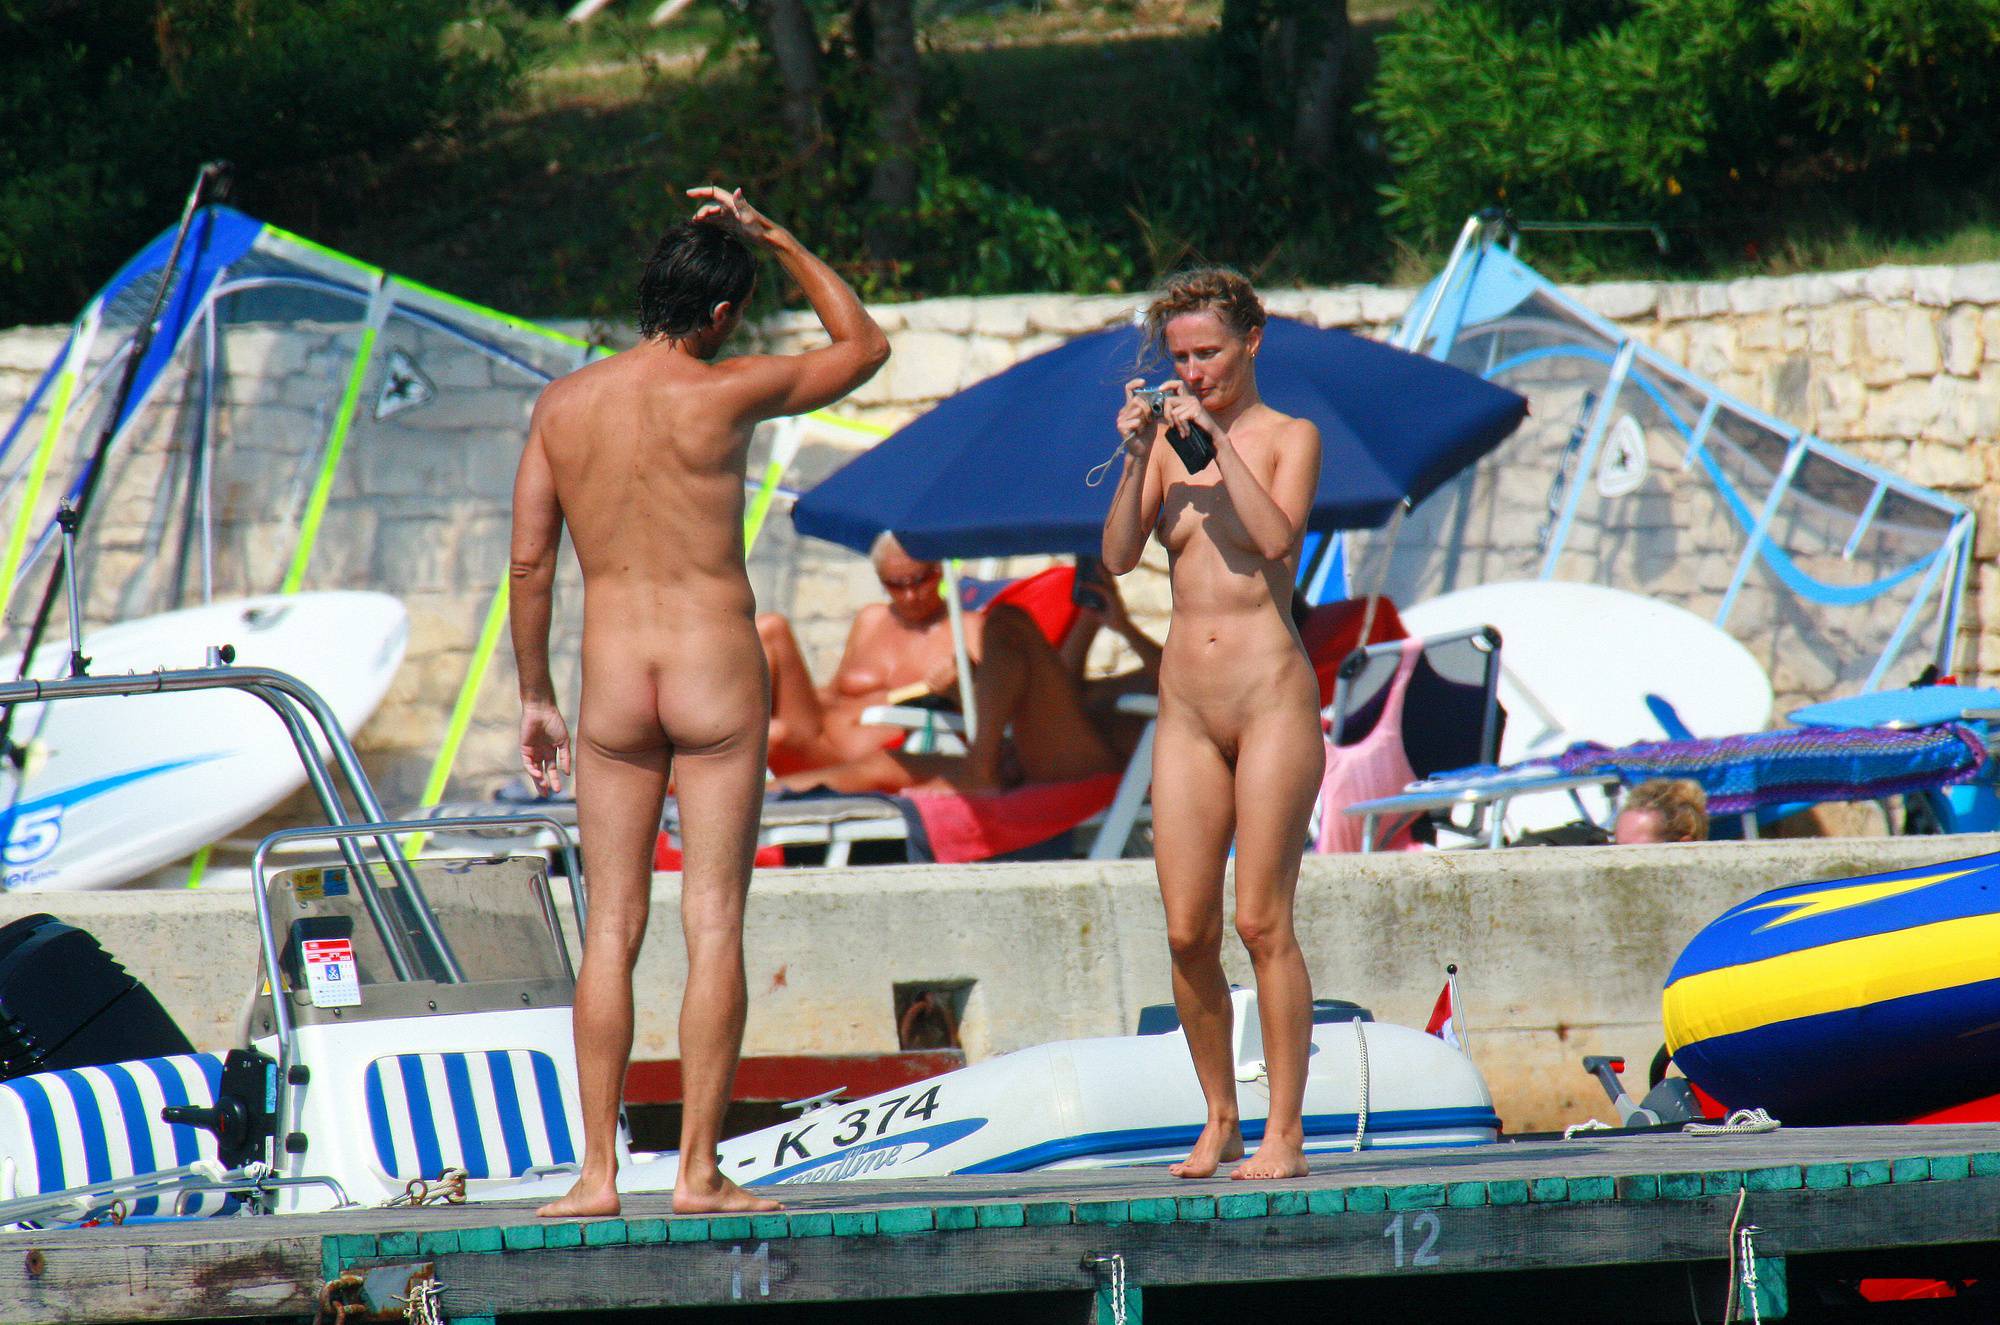 Pure Nudism-Ula FKK Shore Photo Tease - 2